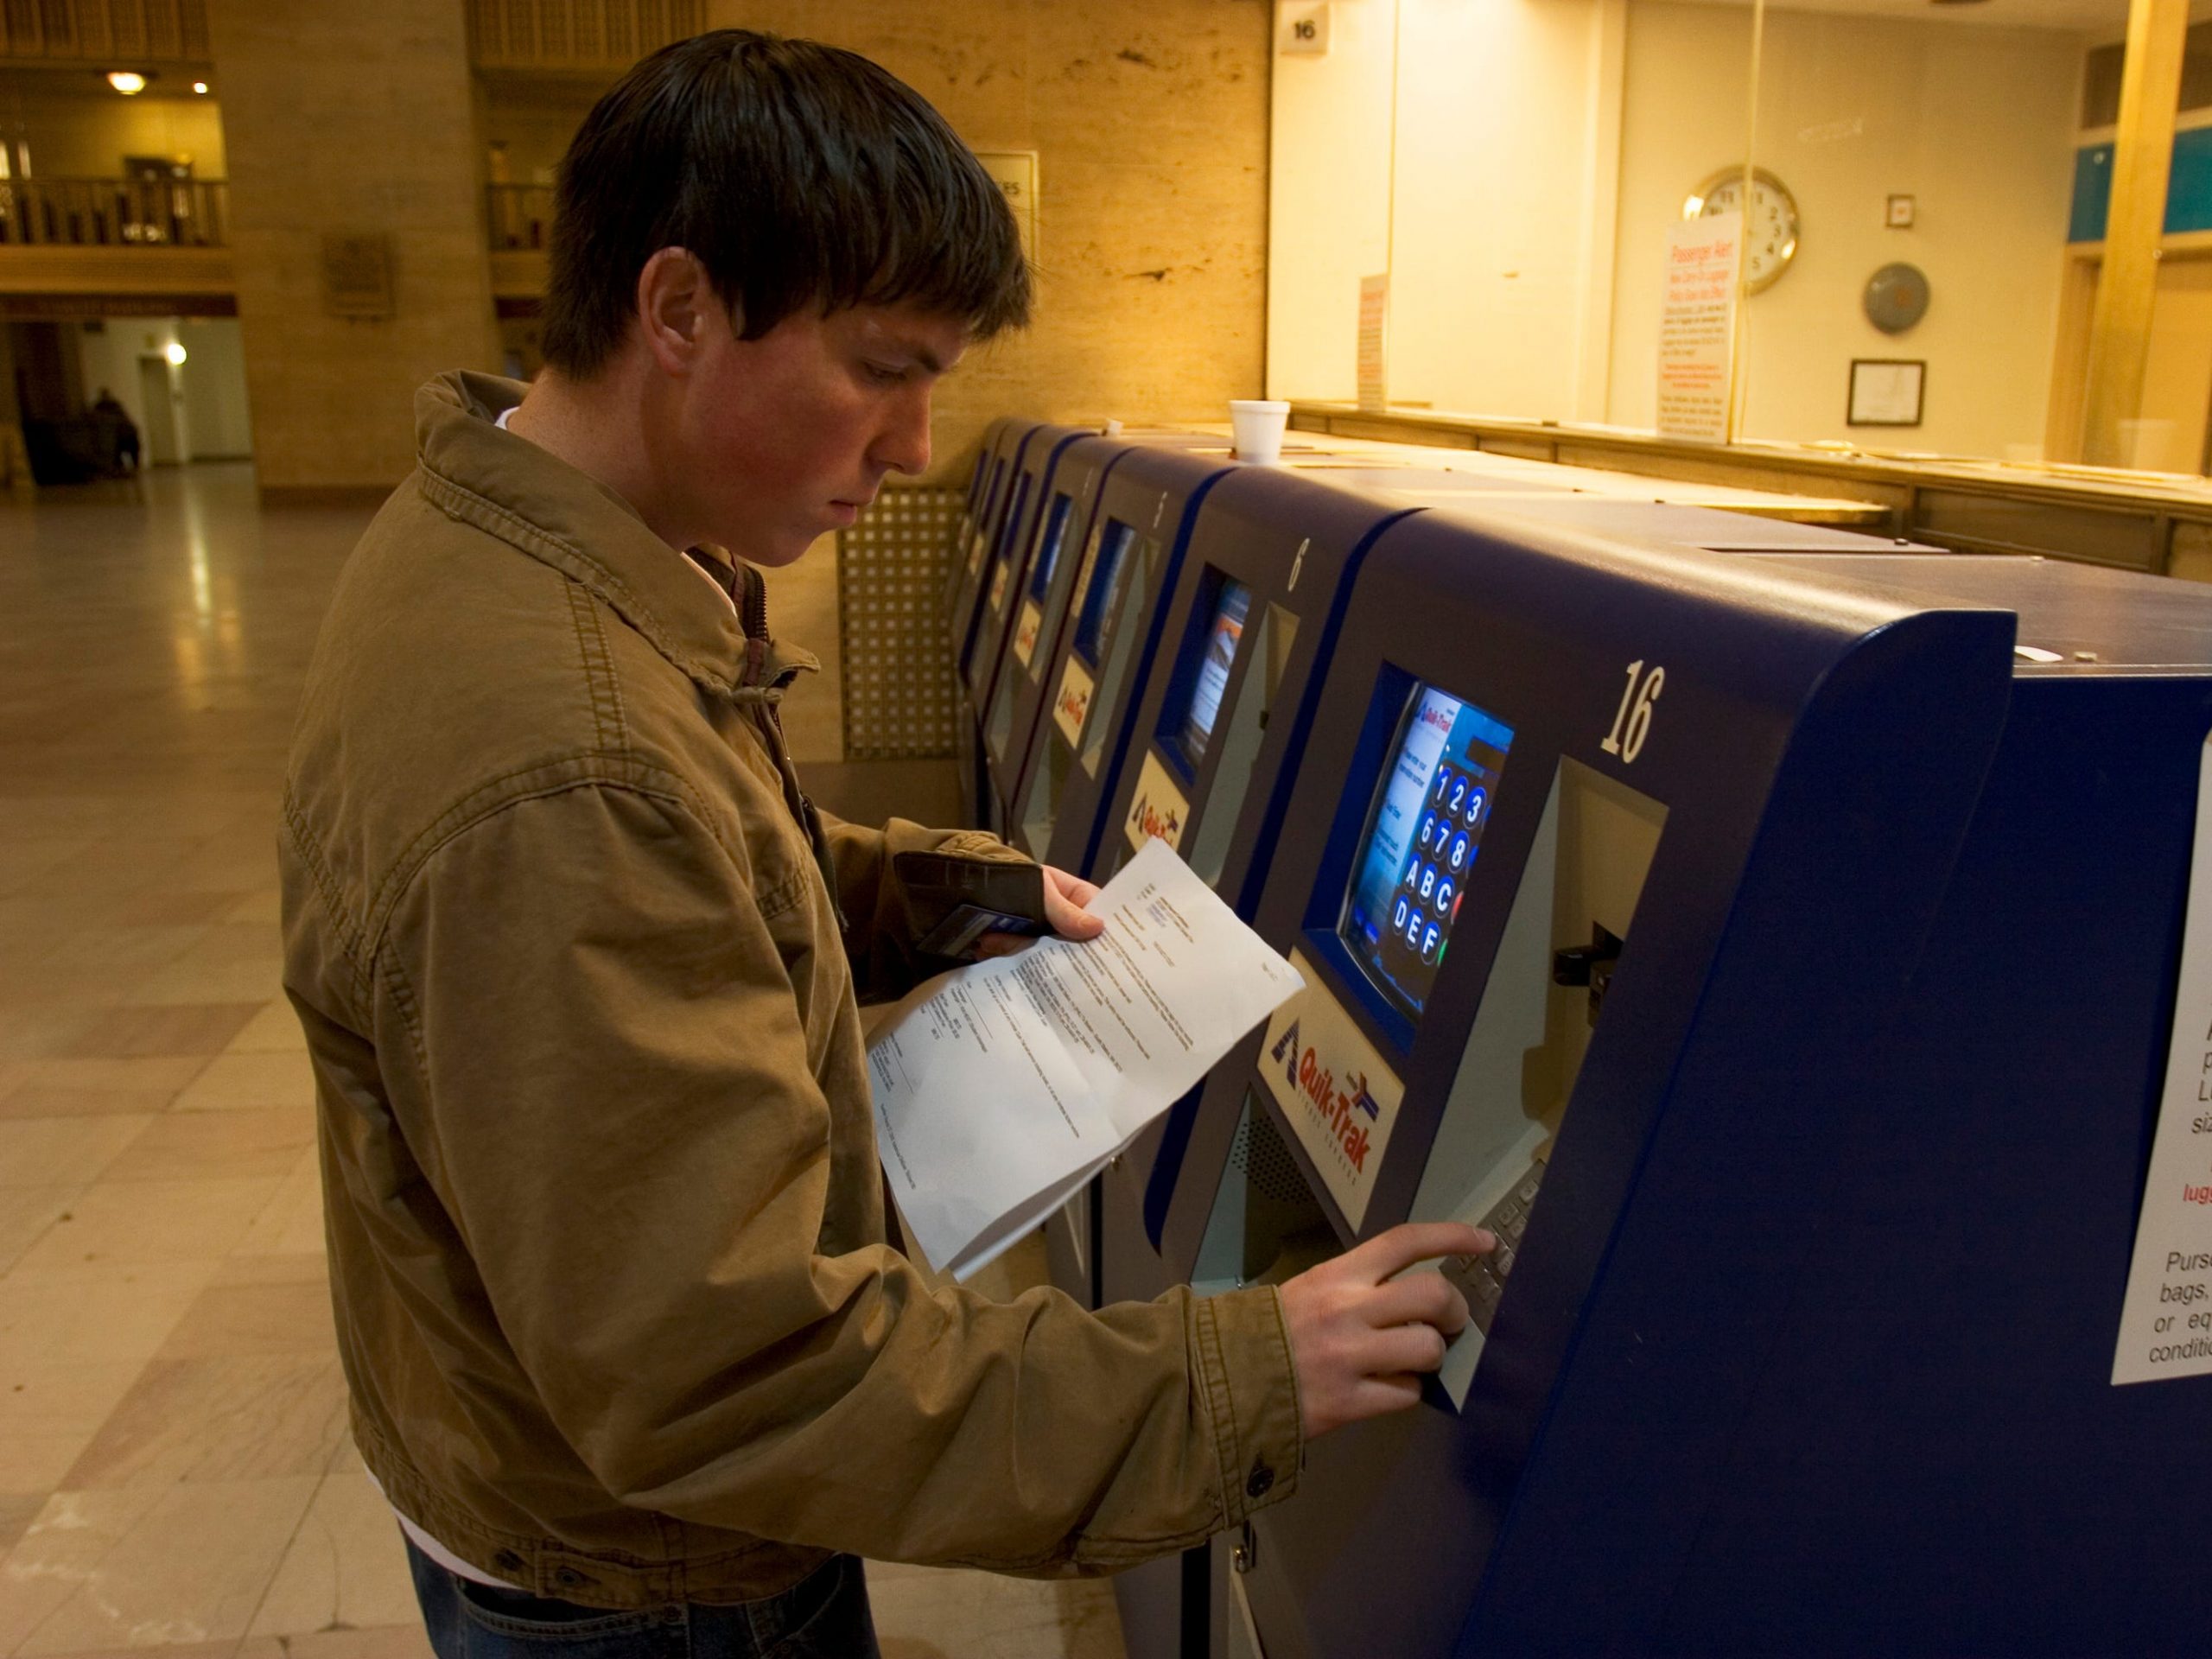 a man purchasing amtrak tickets at a kiosk